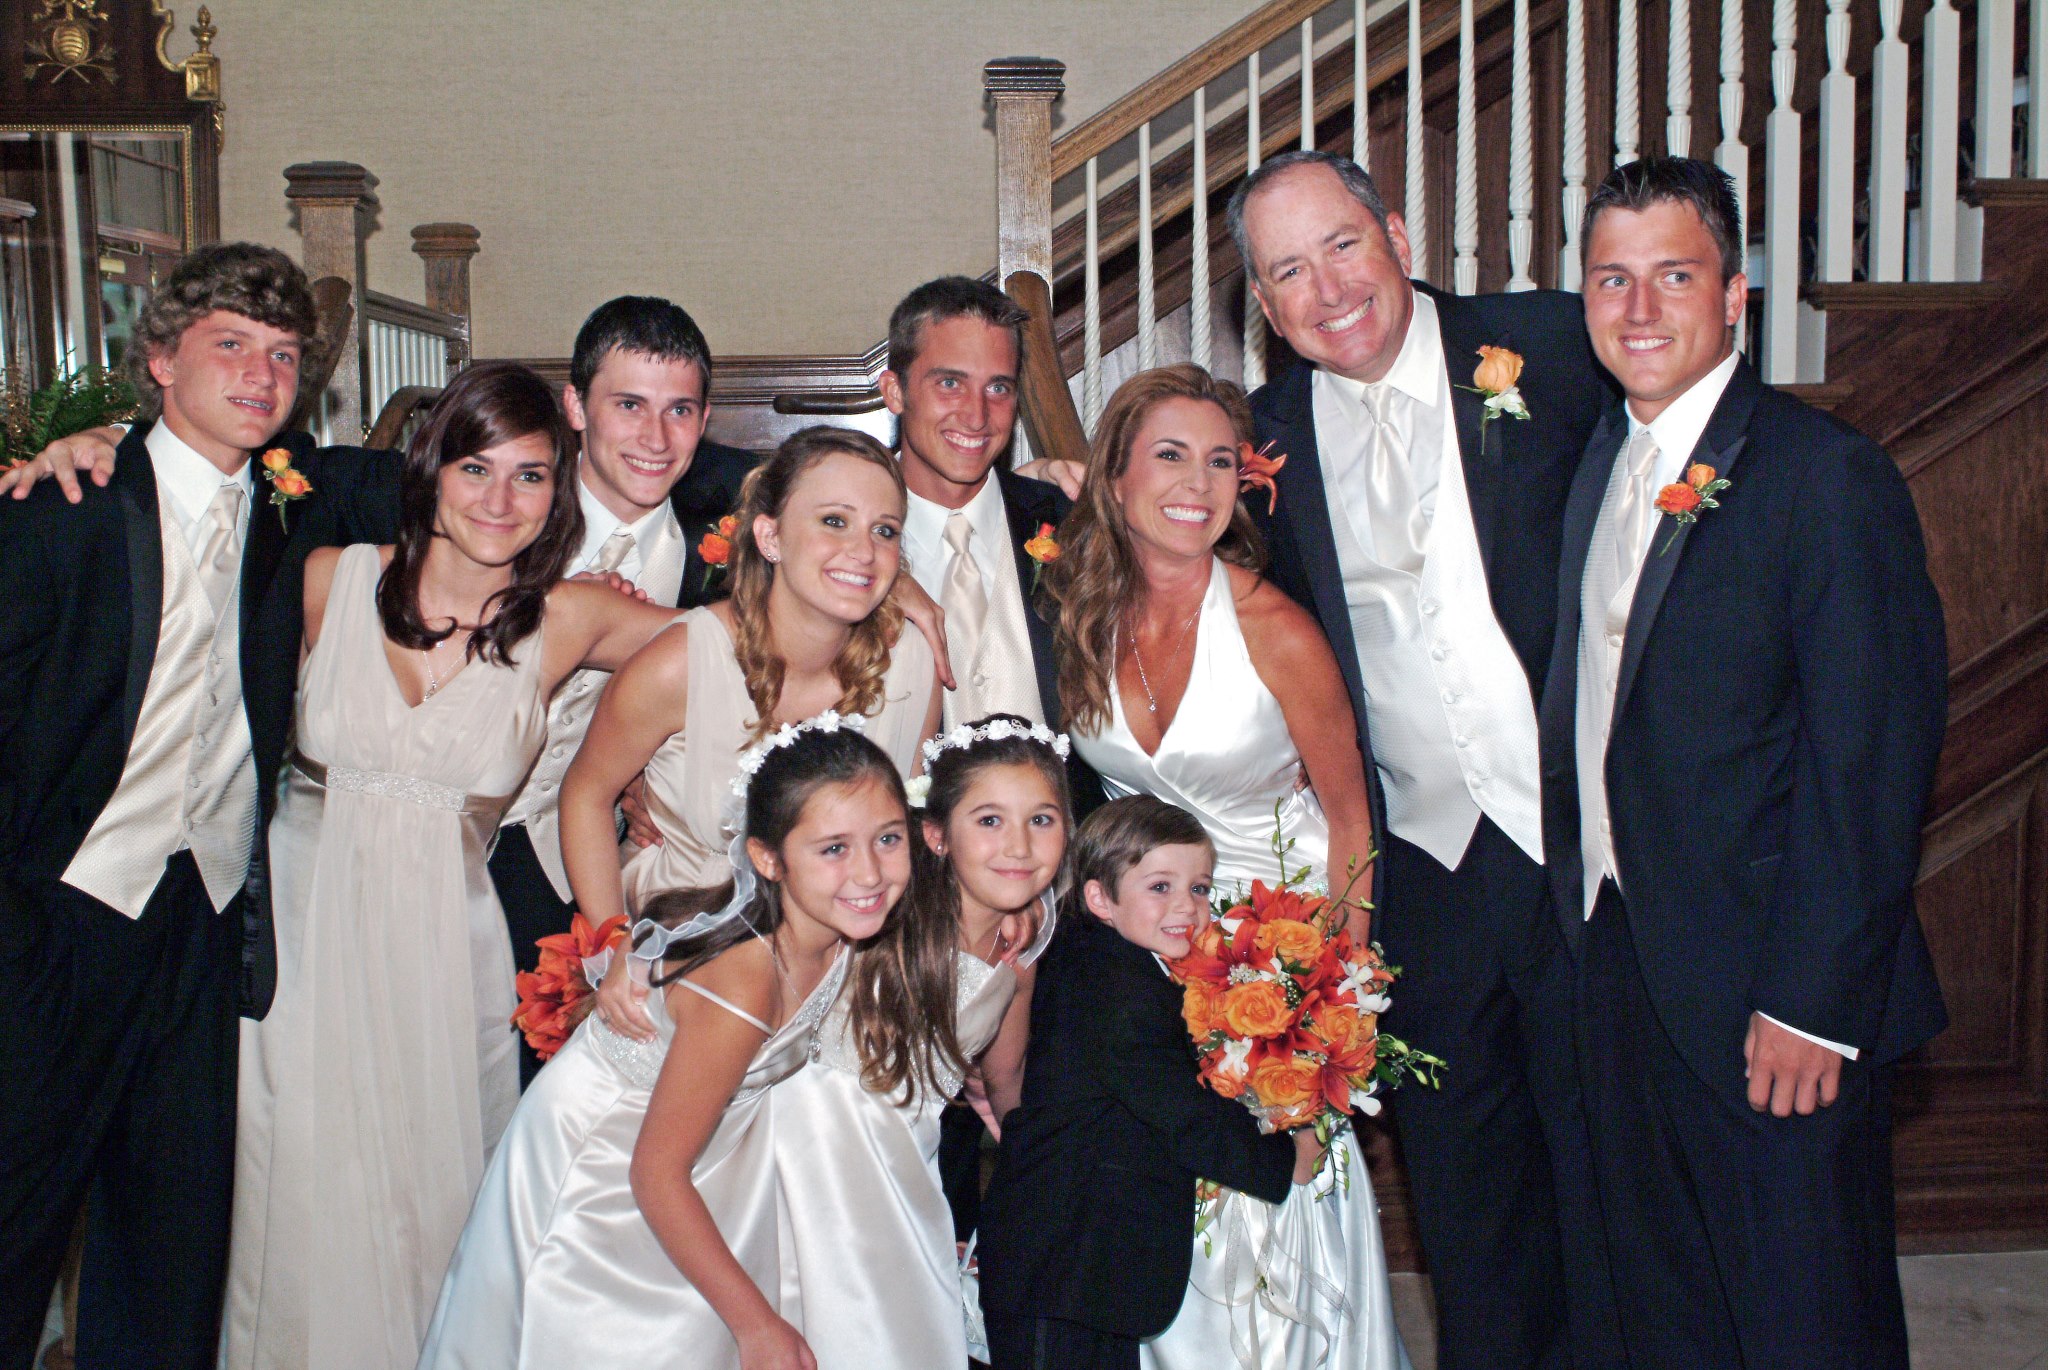 The McKinley Family. Jeff, Heather, Jason, Jillian, Reagan, Conner, Paityn, Colton, Samantha, Trevor and Trent. Alpharetta Athletic Club (2010)